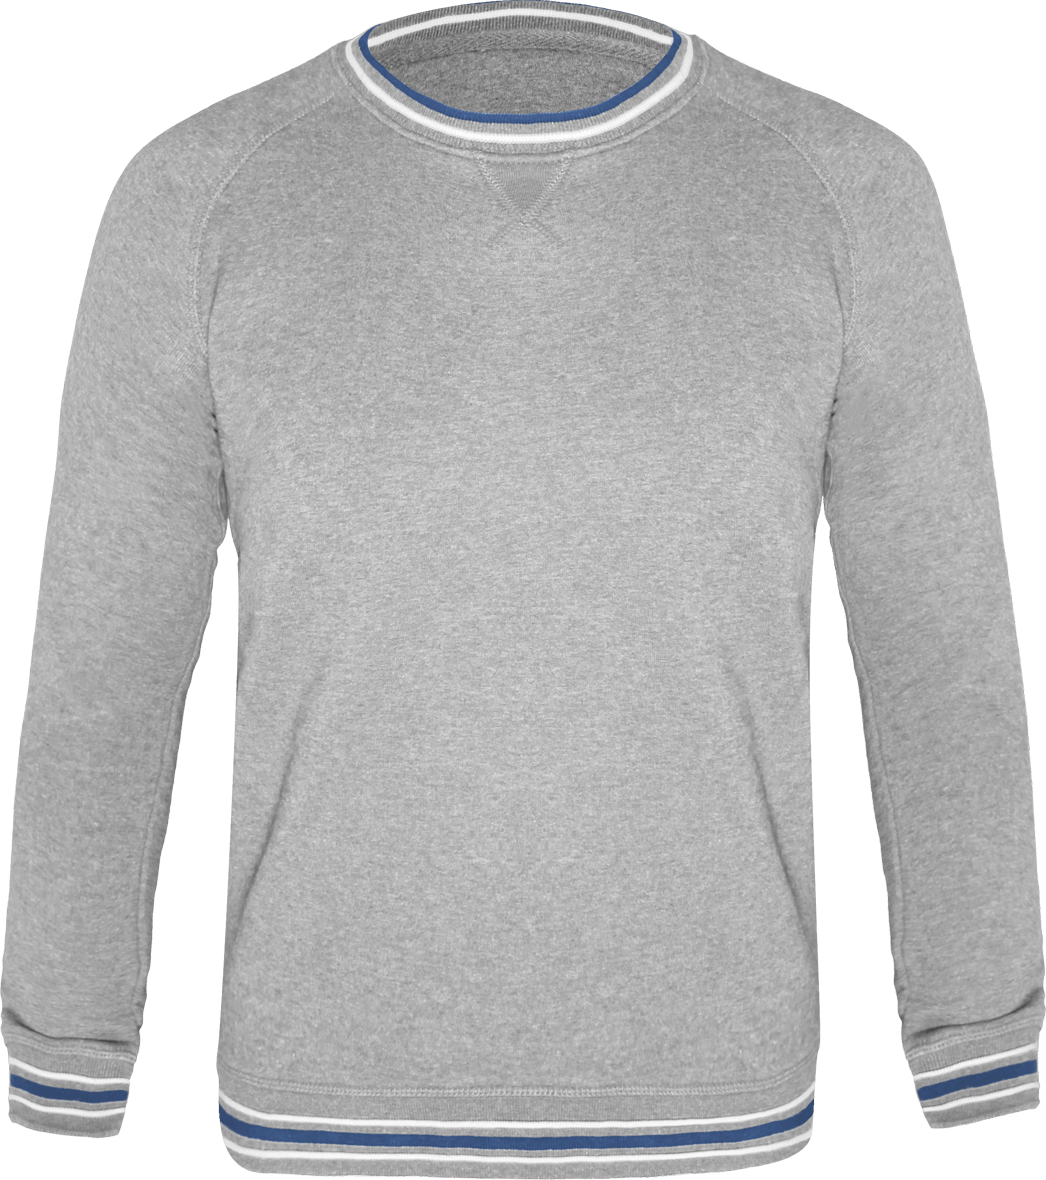 Customizable Stanley Strolls Tipped Men's Sweatshirt H Grey / White / Deep Royal Blue